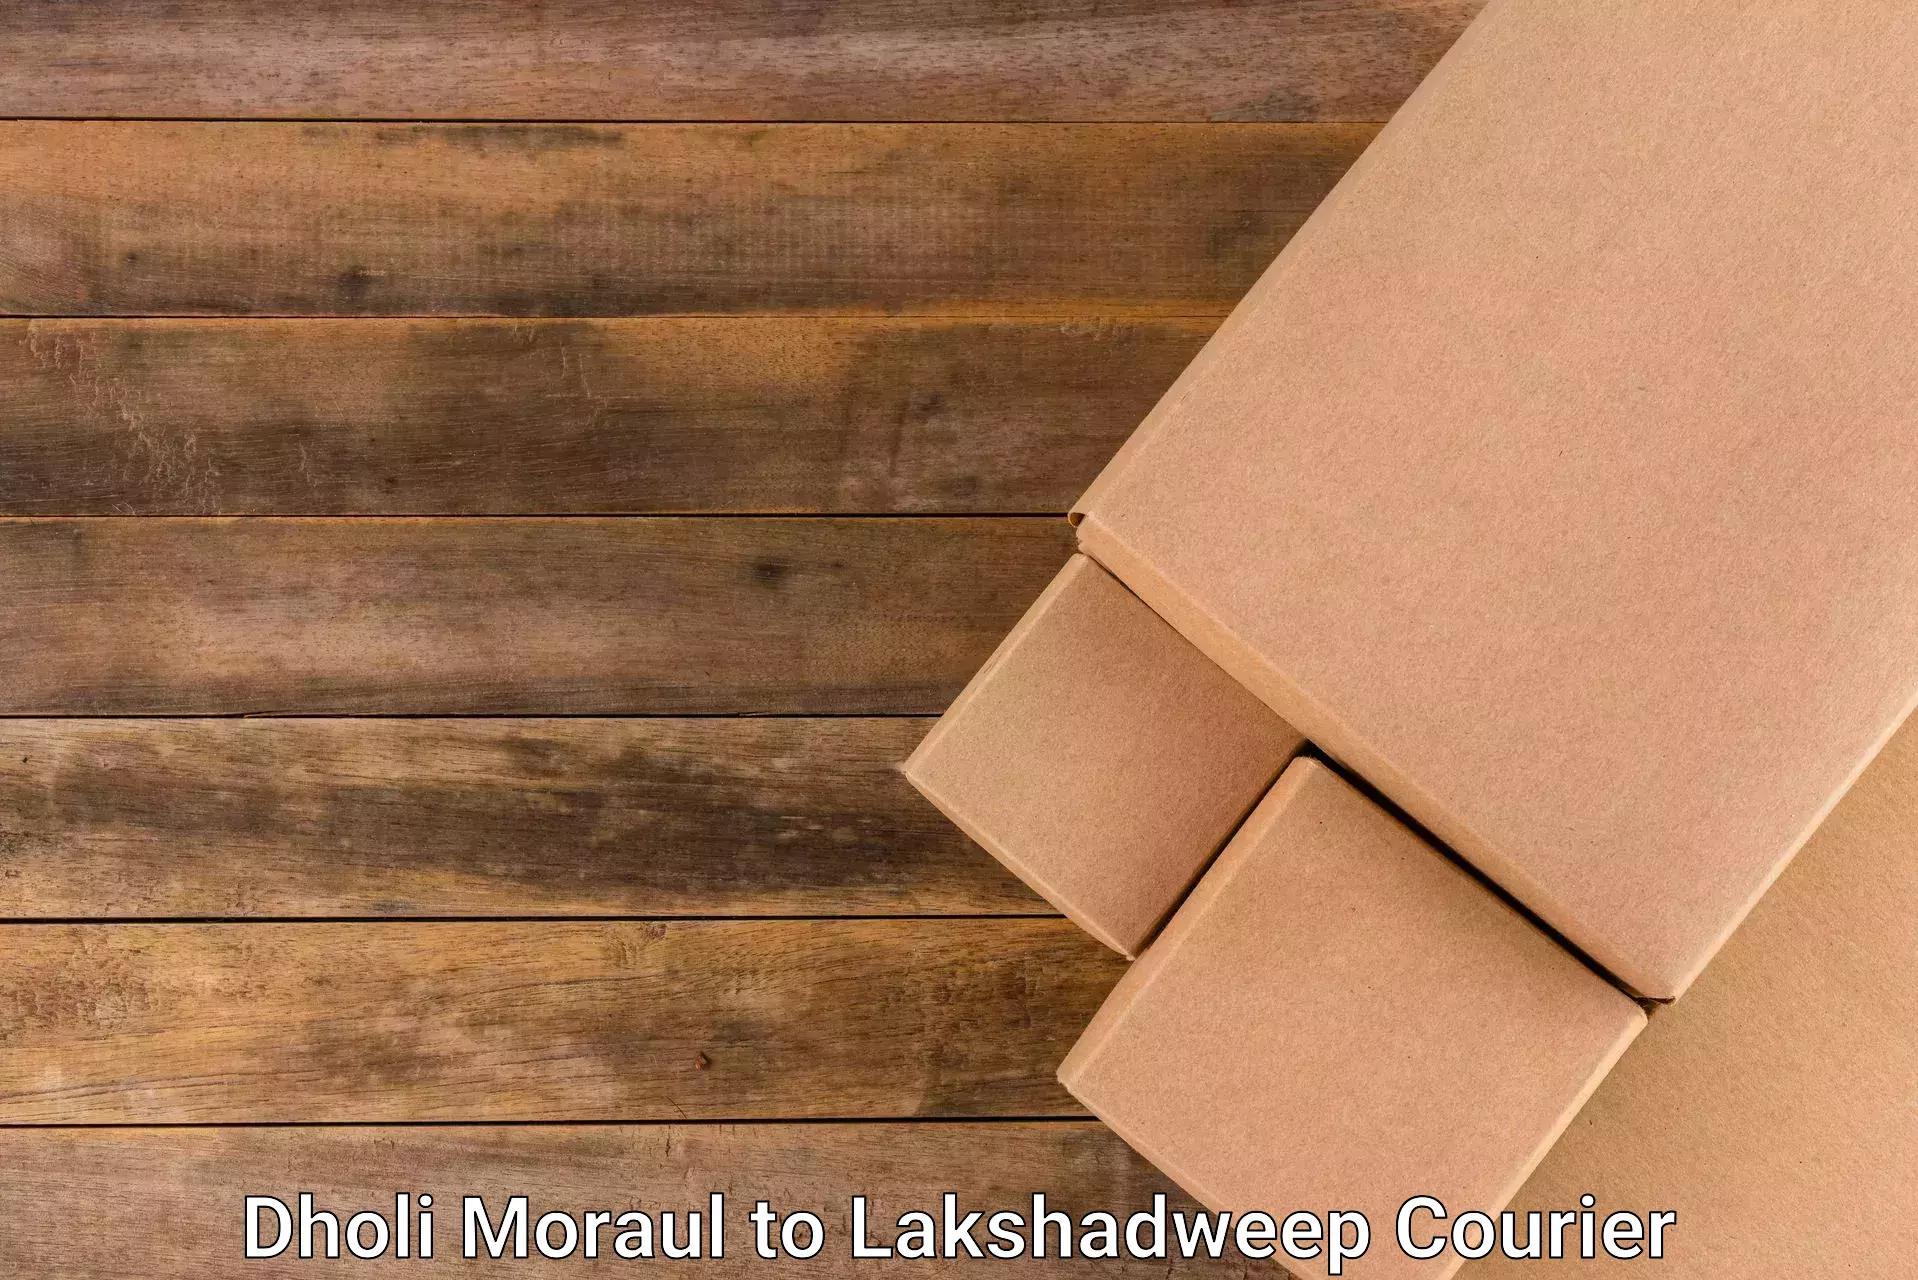 Express package handling Dholi Moraul to Lakshadweep